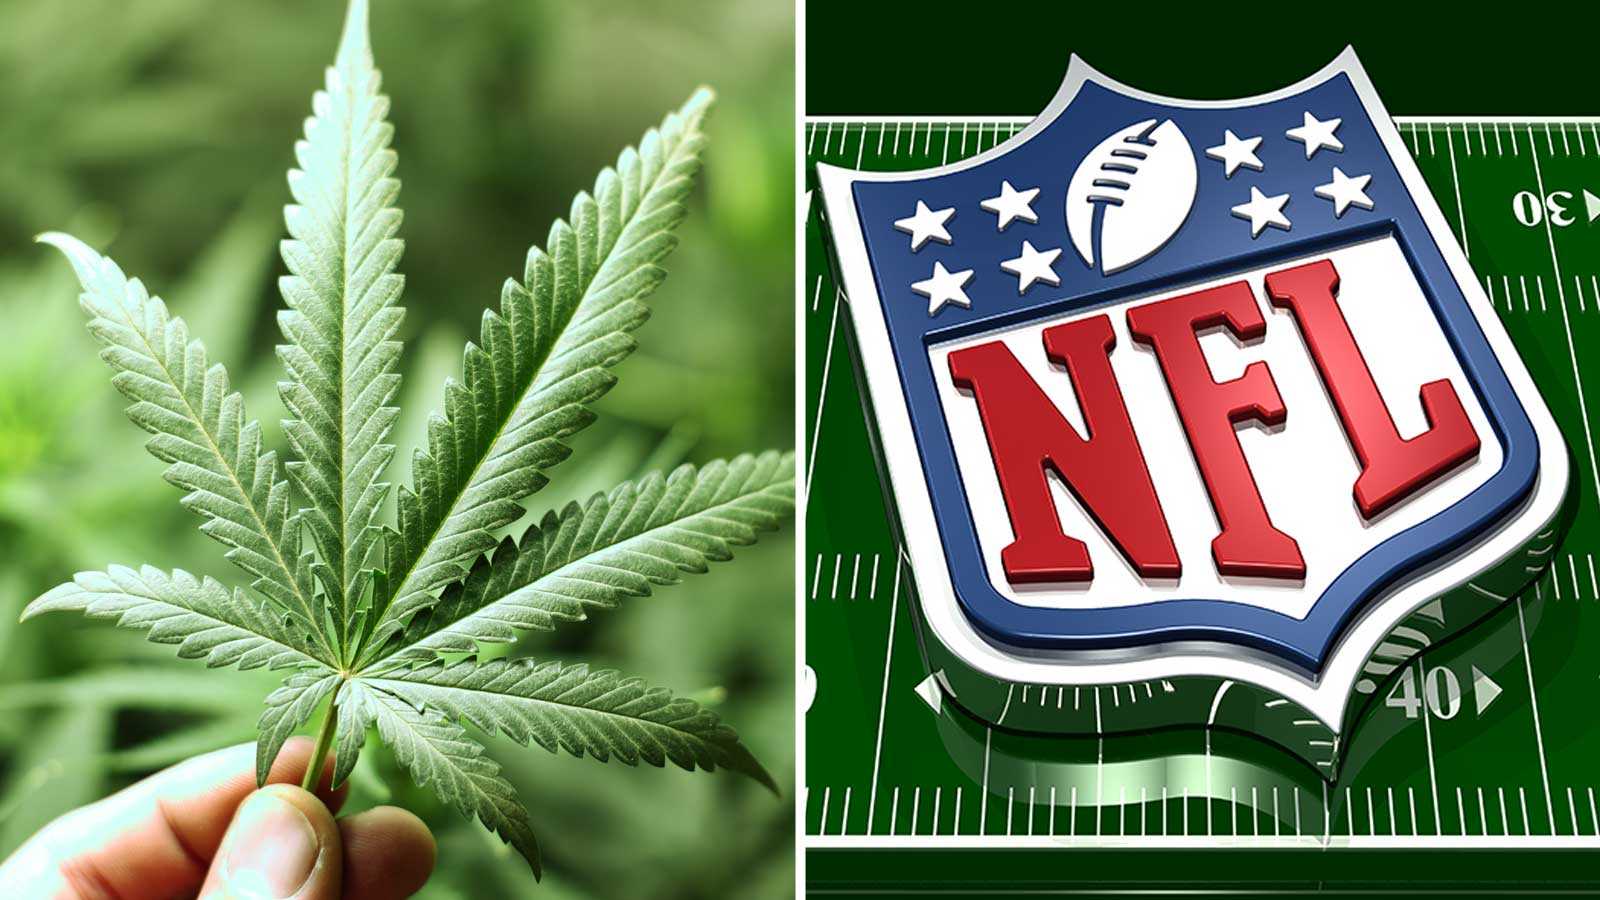  NFL “burns down” Ad plan for Medical Marijuana